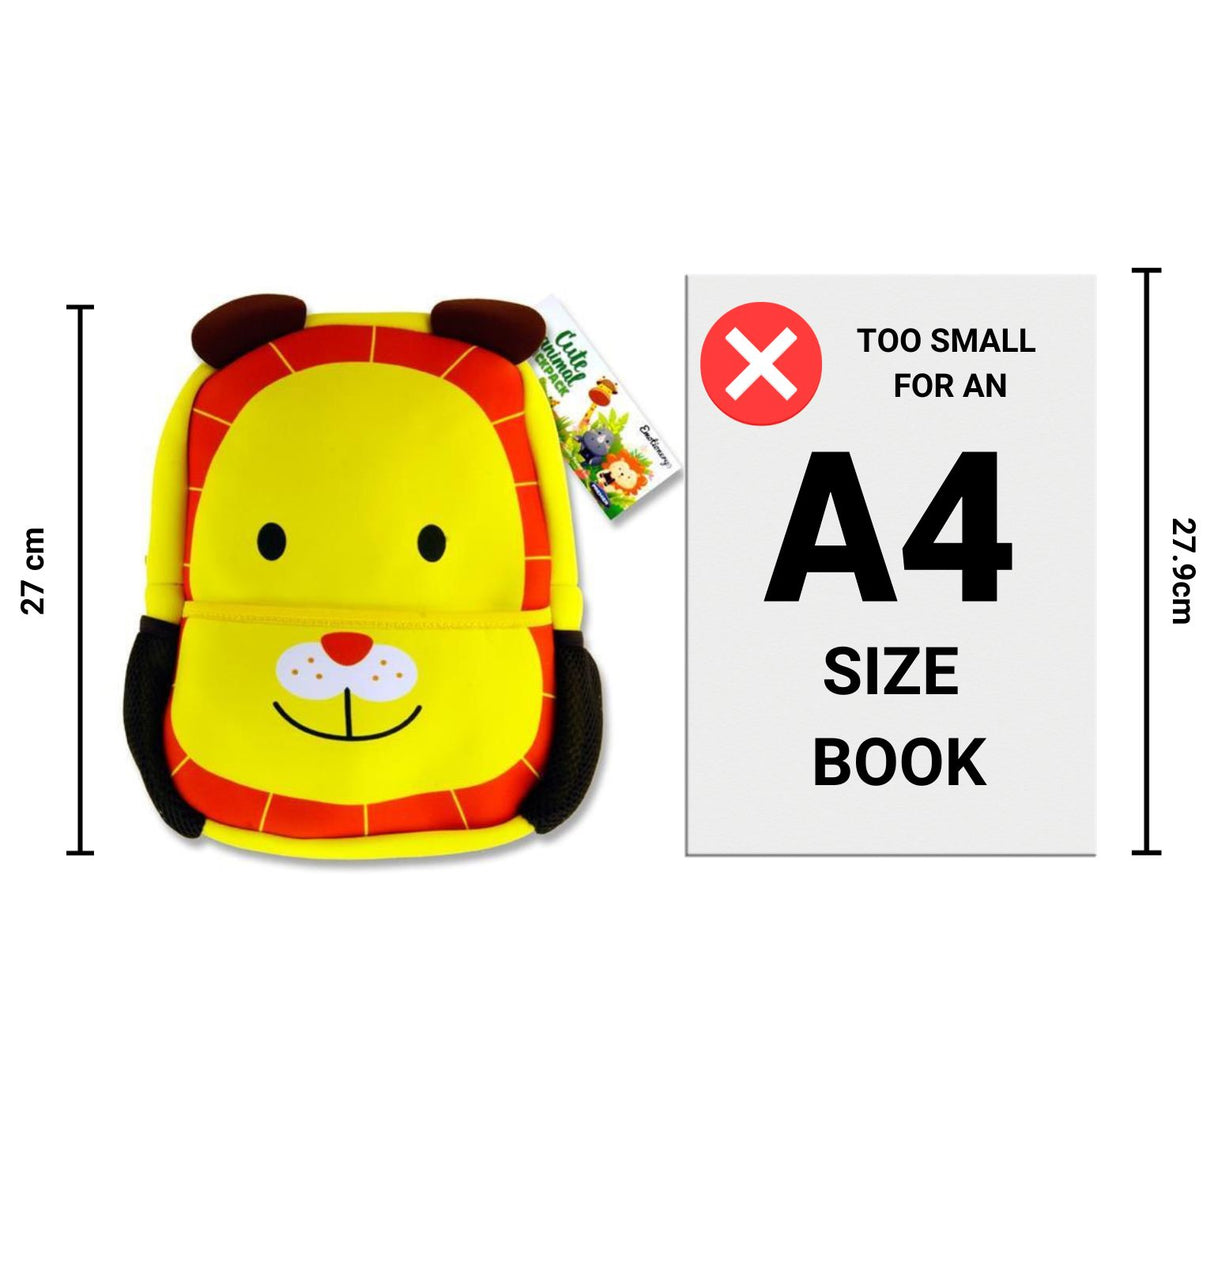 ■ Emotionery Neoprene Cute Animal Junior Backpack - Lion by Emotionery on Schoolbooks.ie